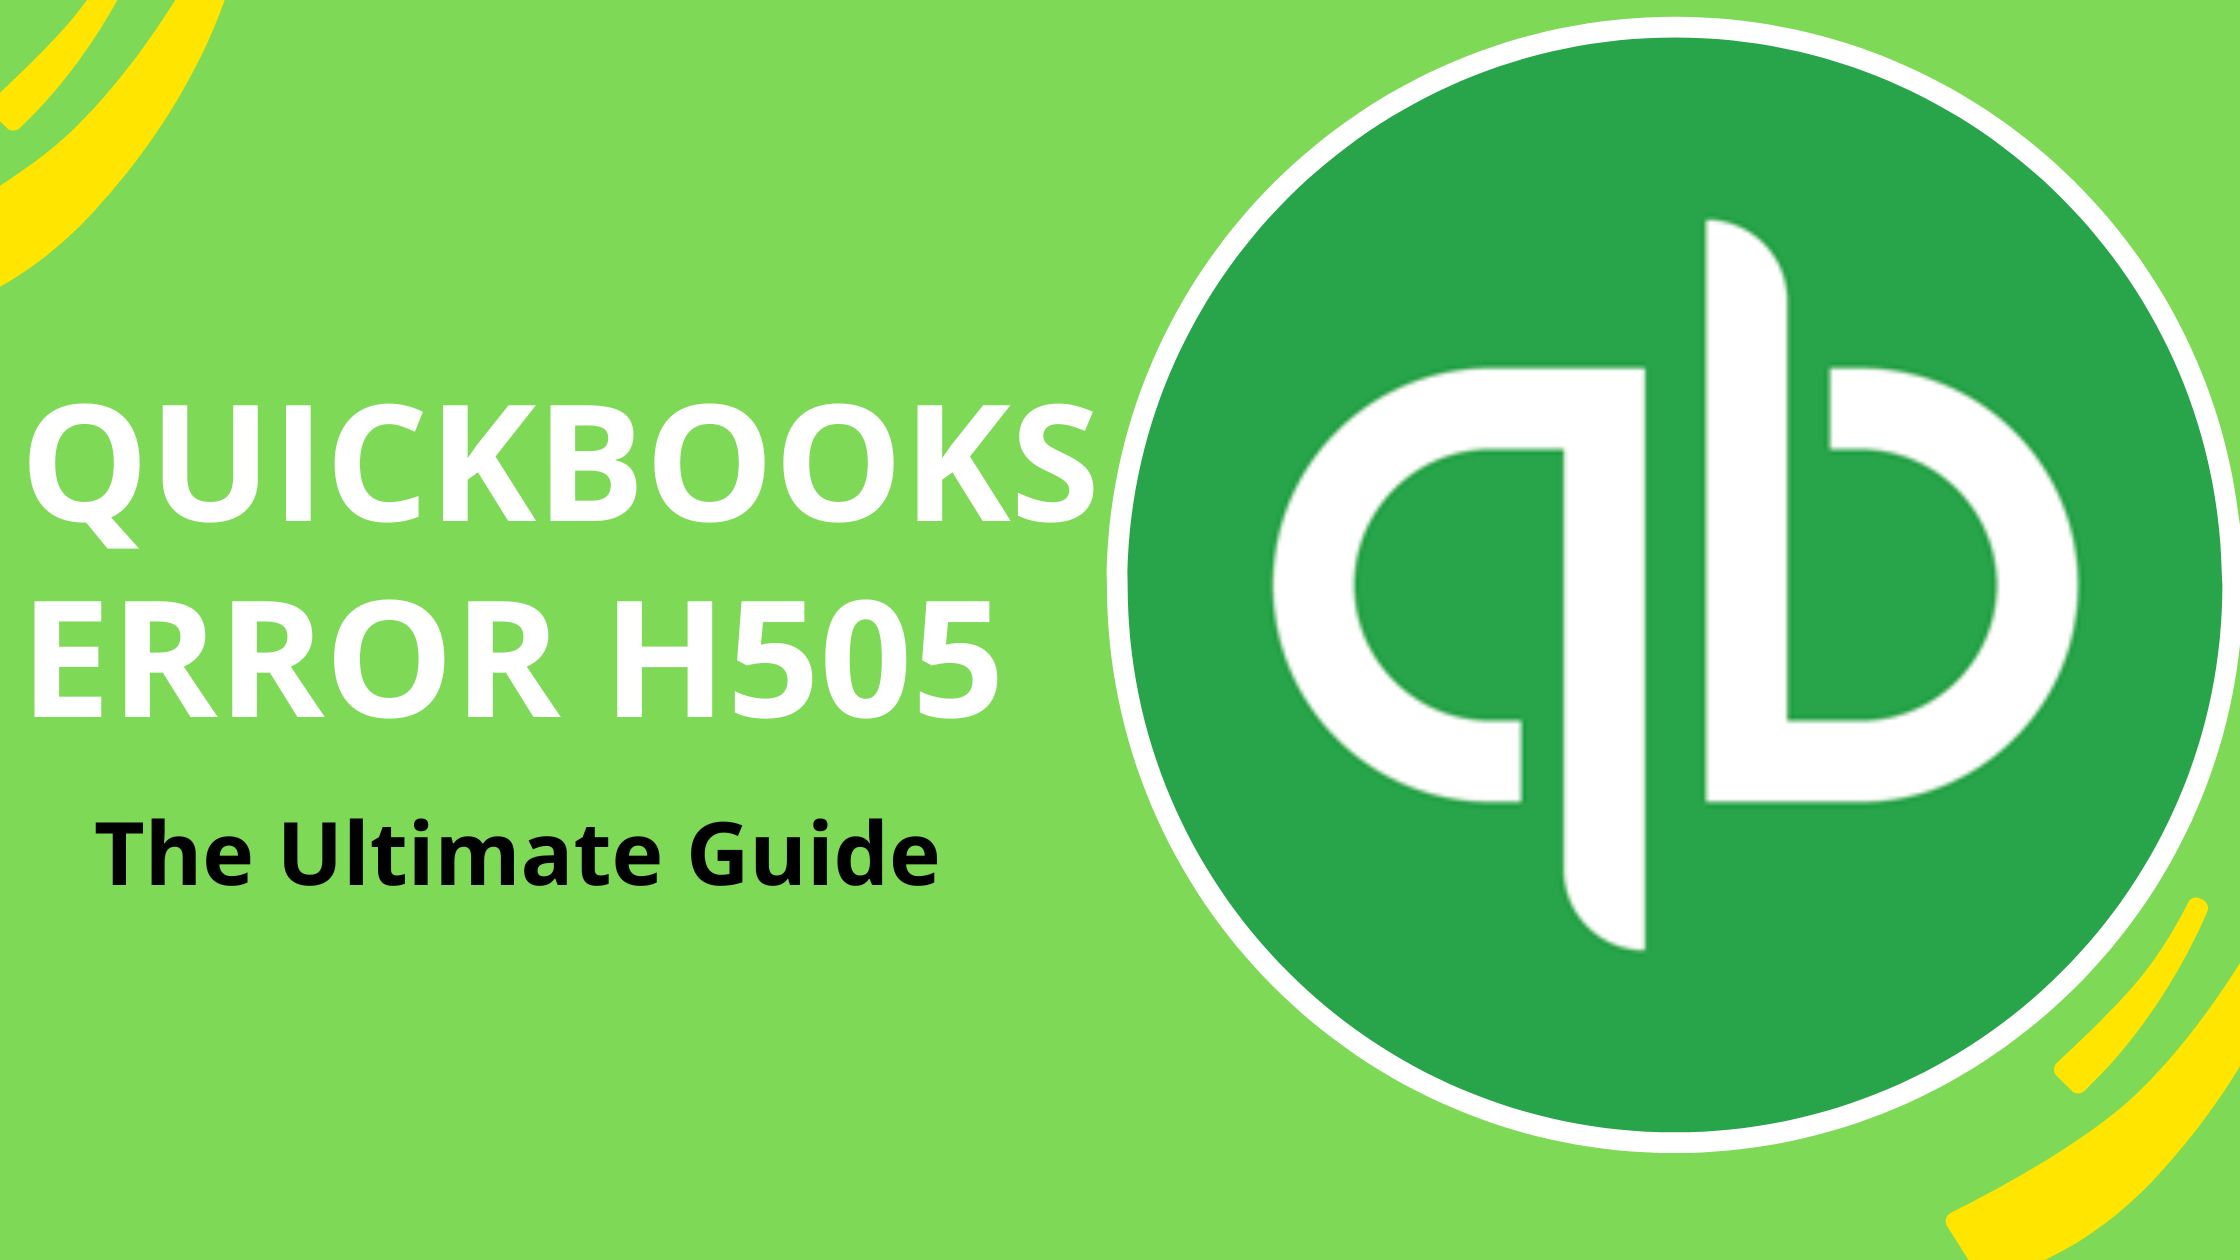 QuickBooks Error H505: The Ultimate Guide to Resolving the Error